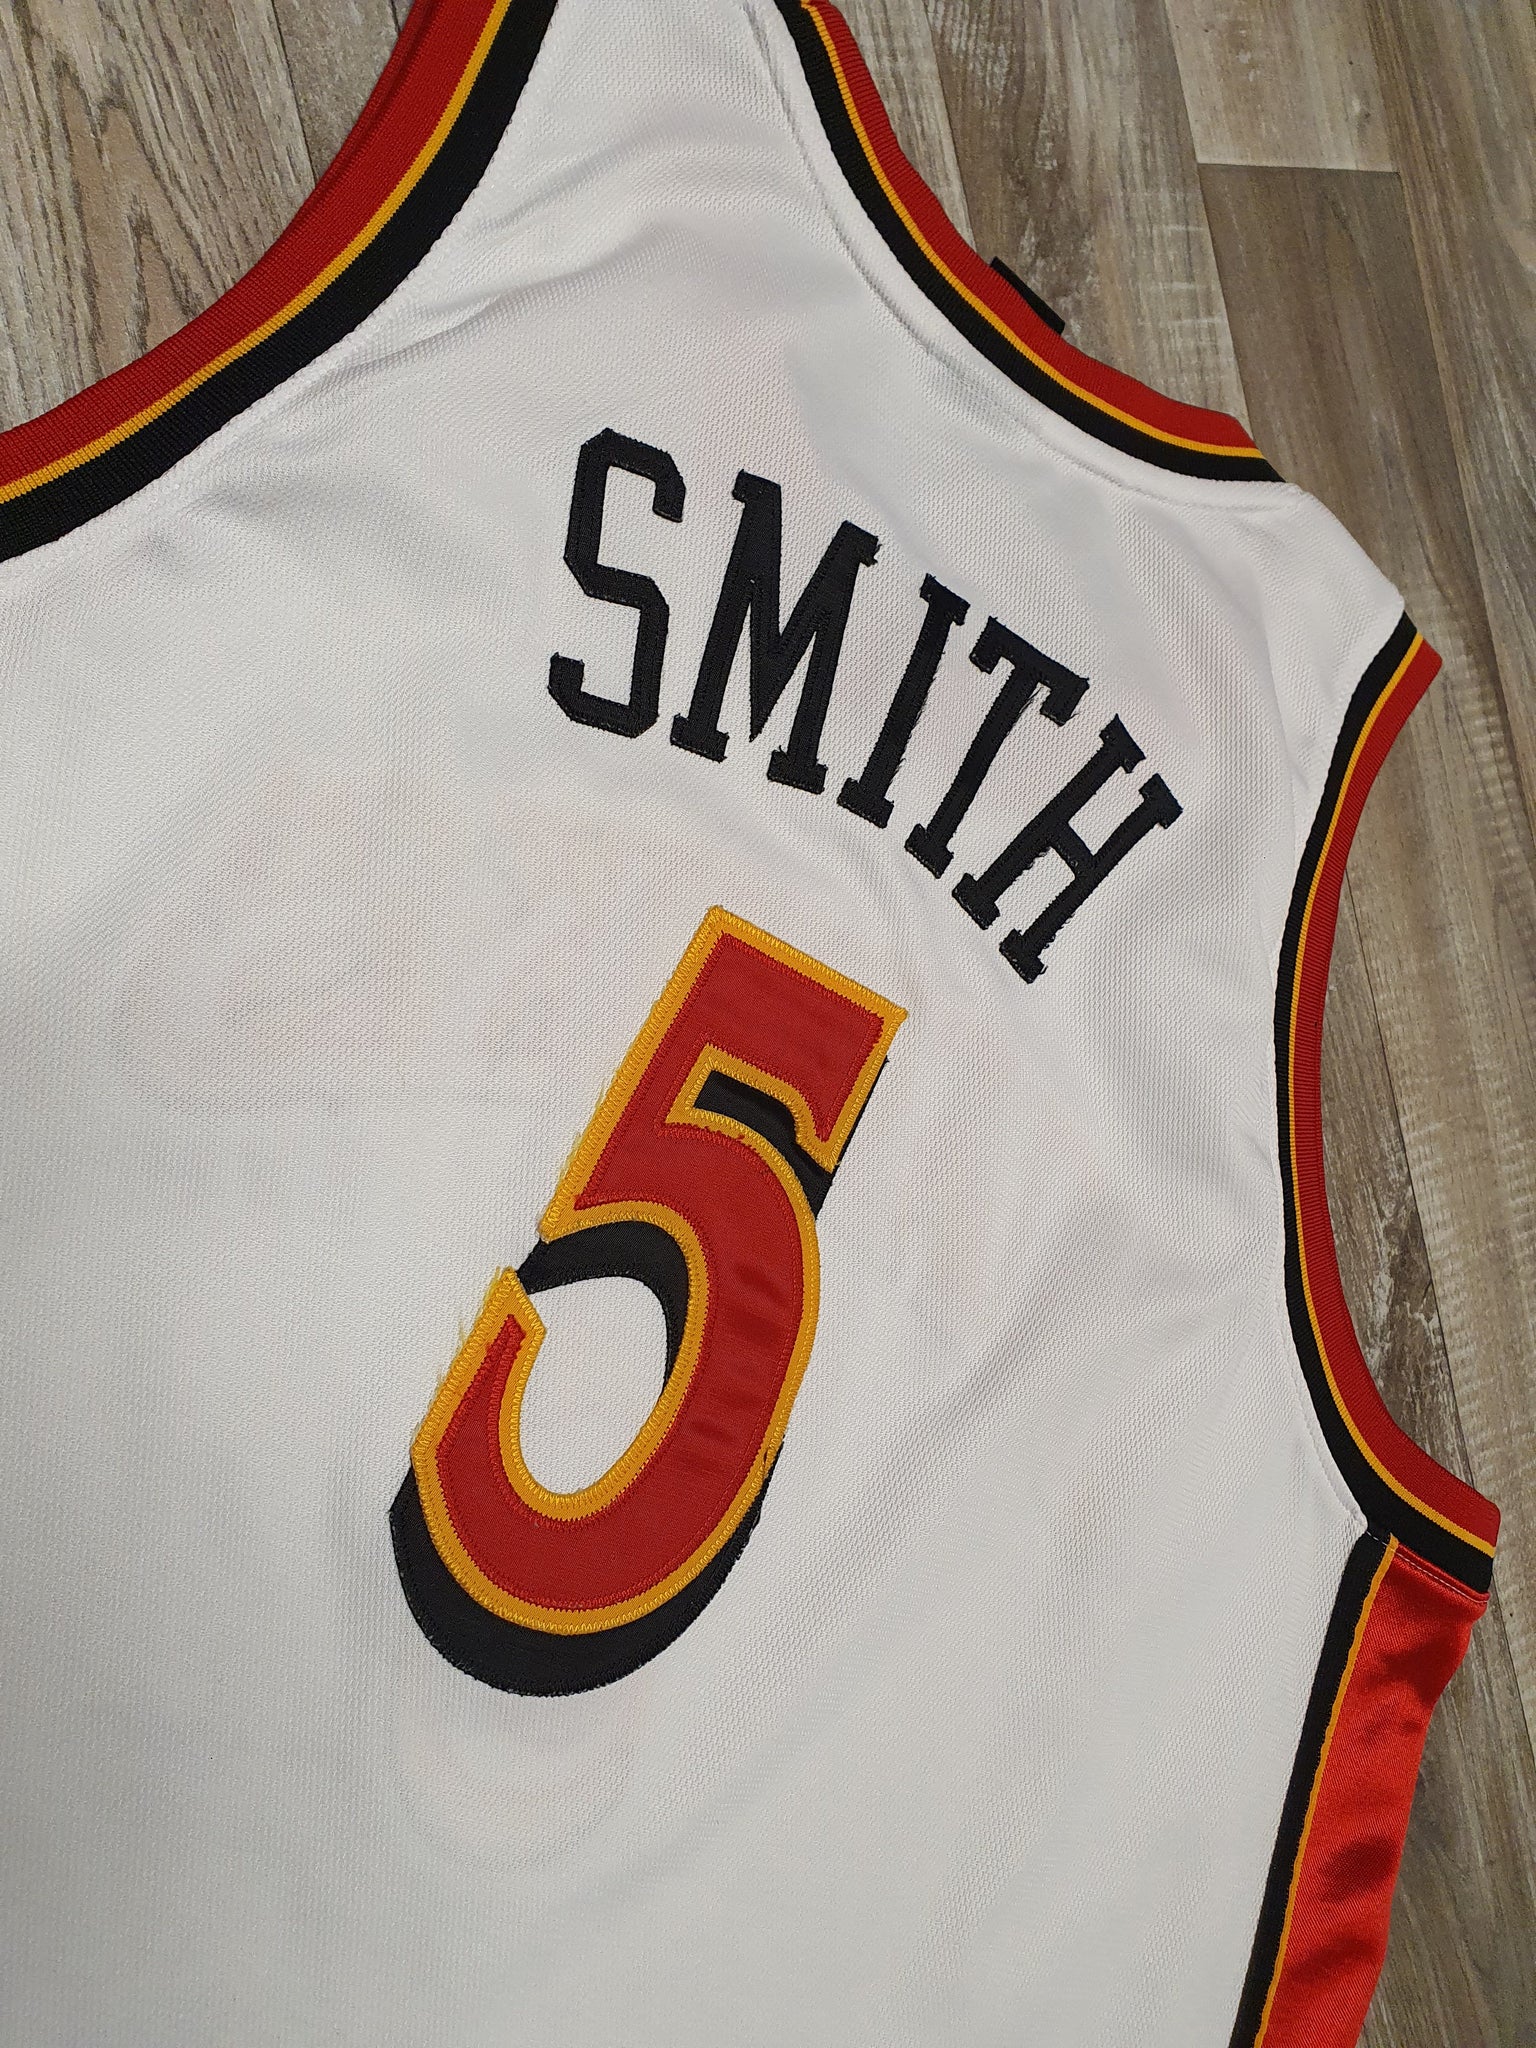 Authentic Adidas NBA Atlanta Hawks Josh Smith Basketball Jersey